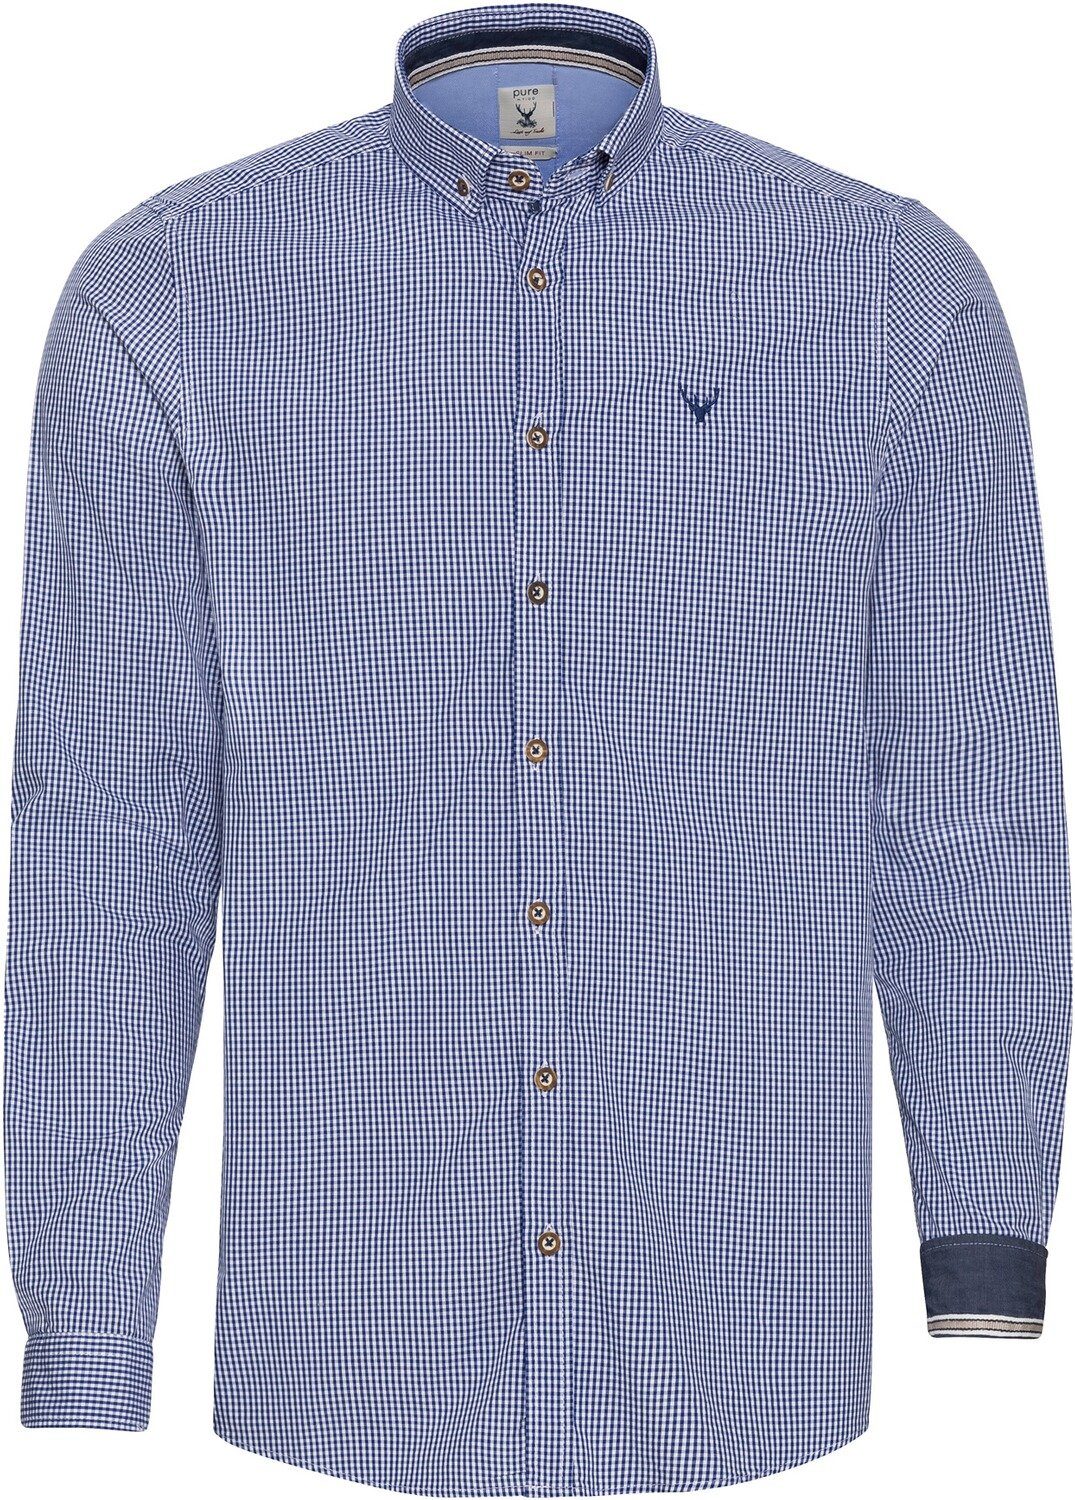 Pure Slim Fit Trachtenhemd Karo-Hemd Blau